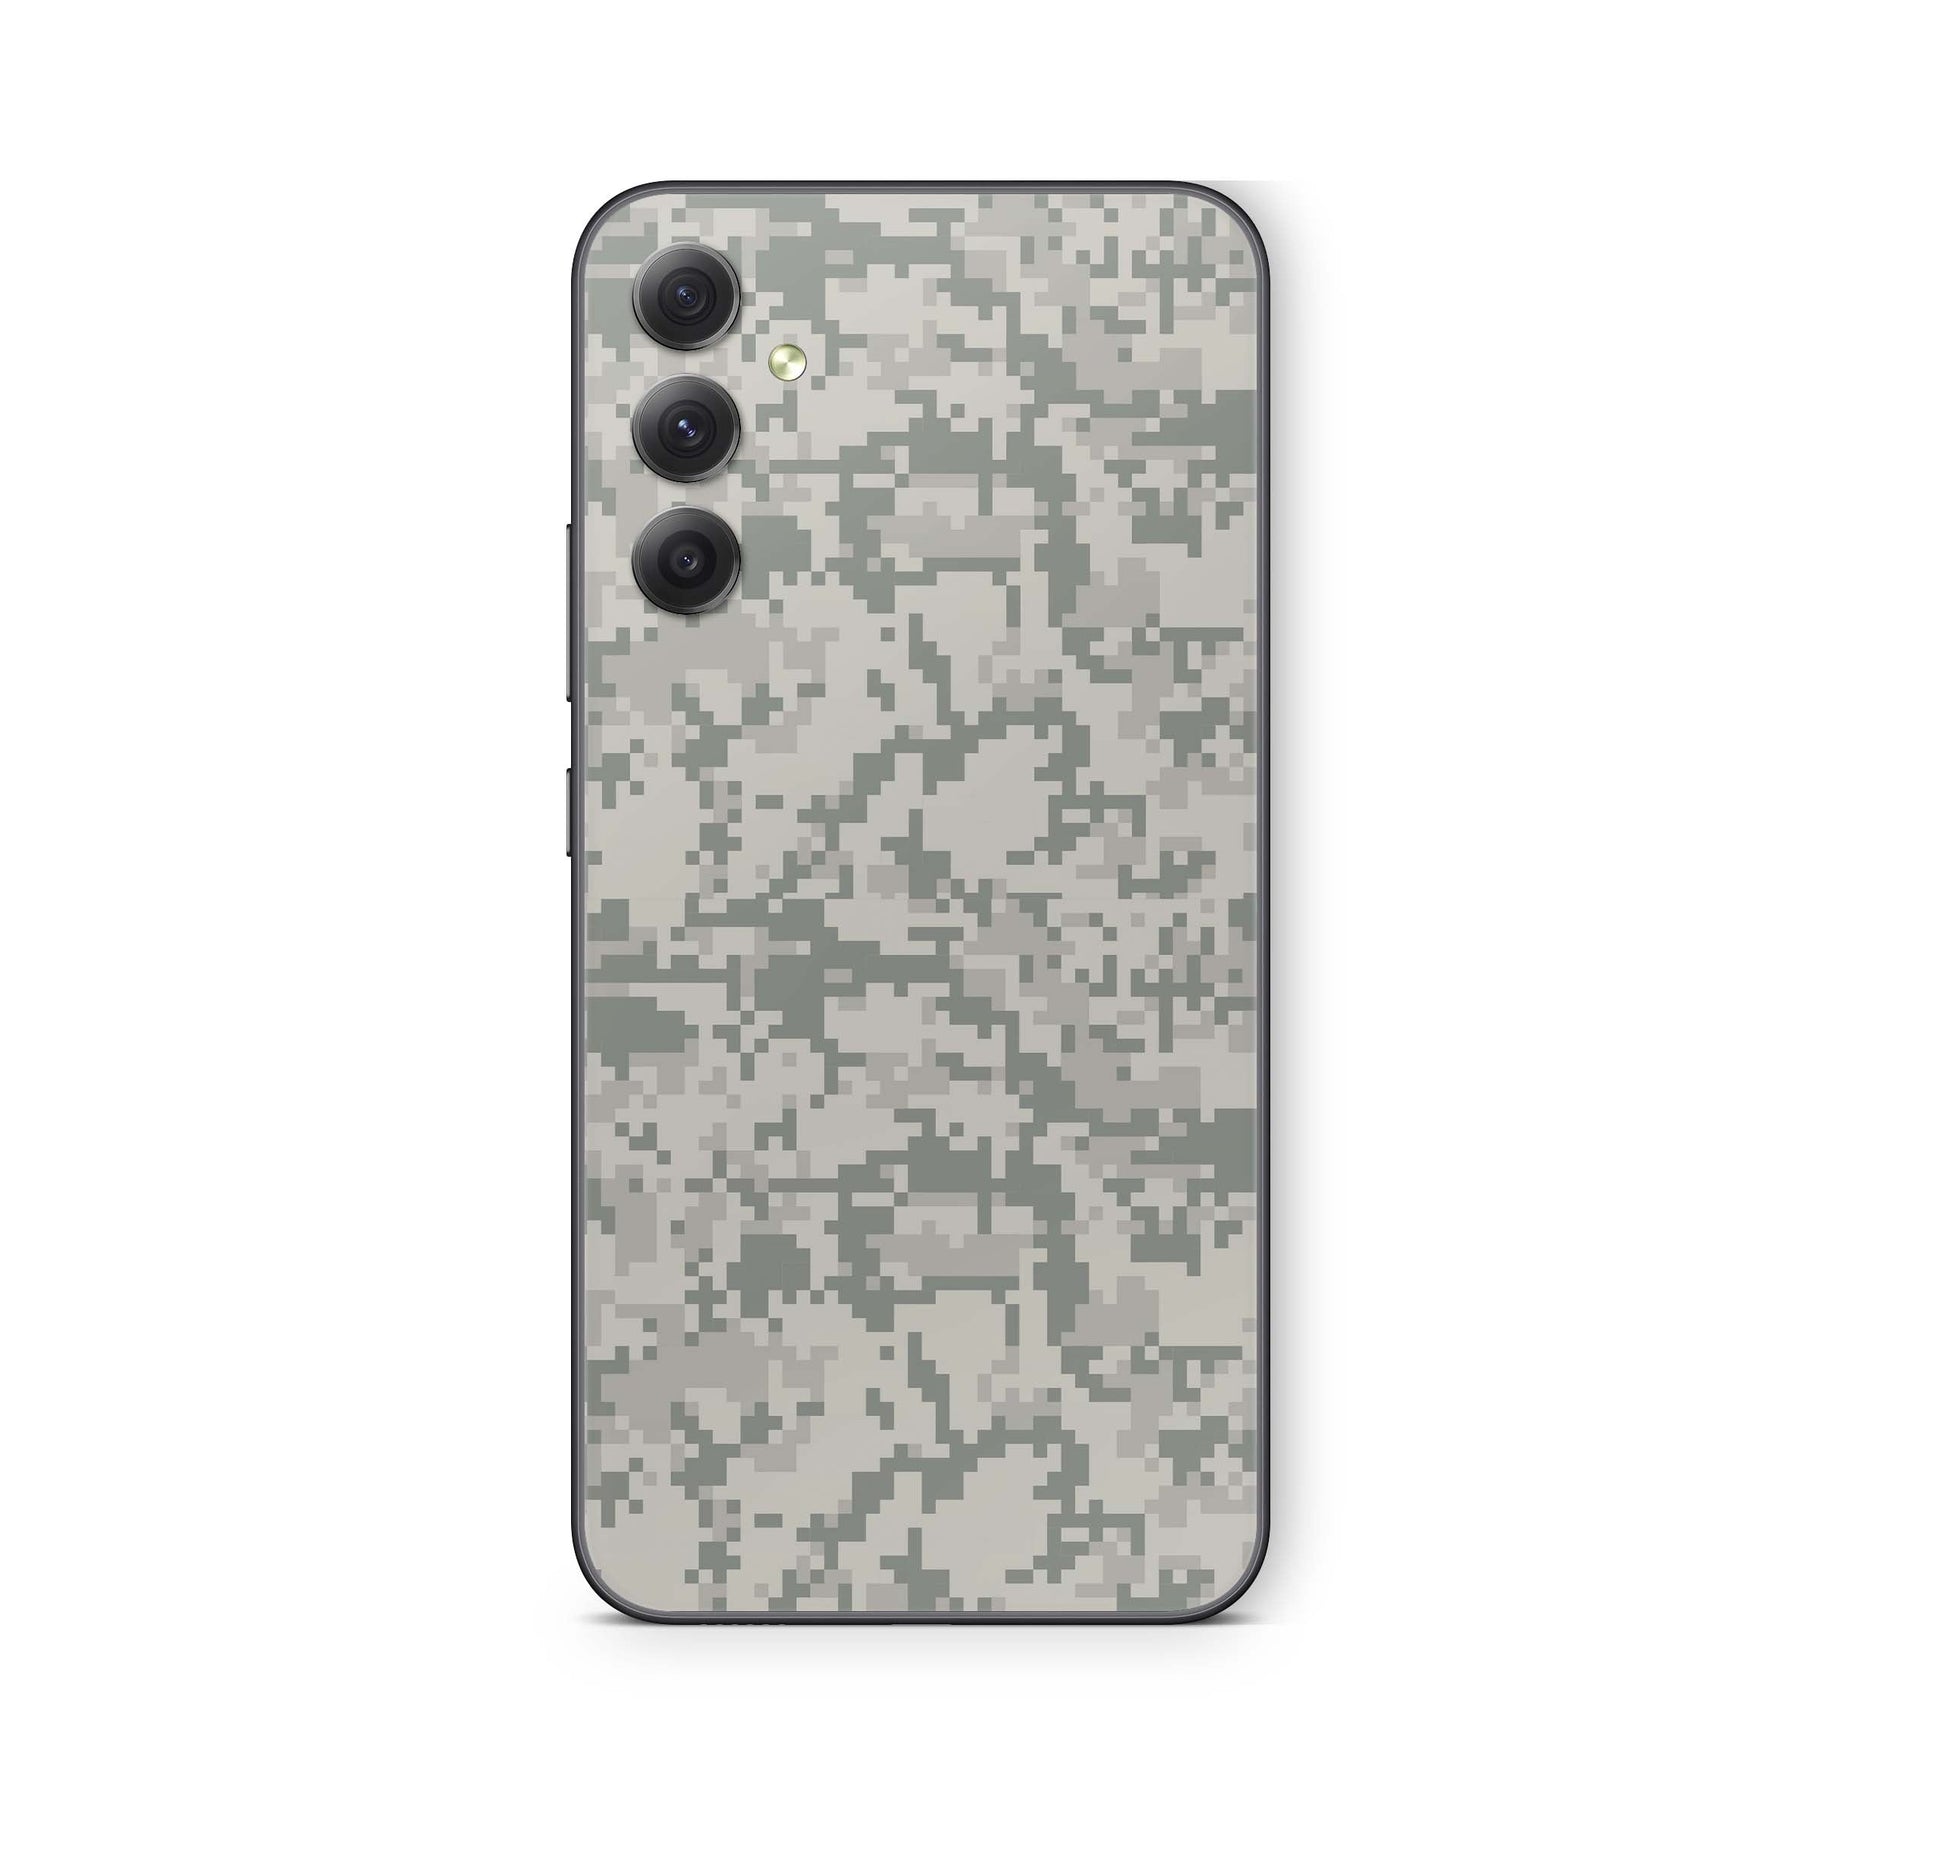 Samsung Galaxy A52 Skin Schutzfolie Aufkleber Skins Design Acu Camo Elektronik-Sticker & -Aufkleber skins4u   